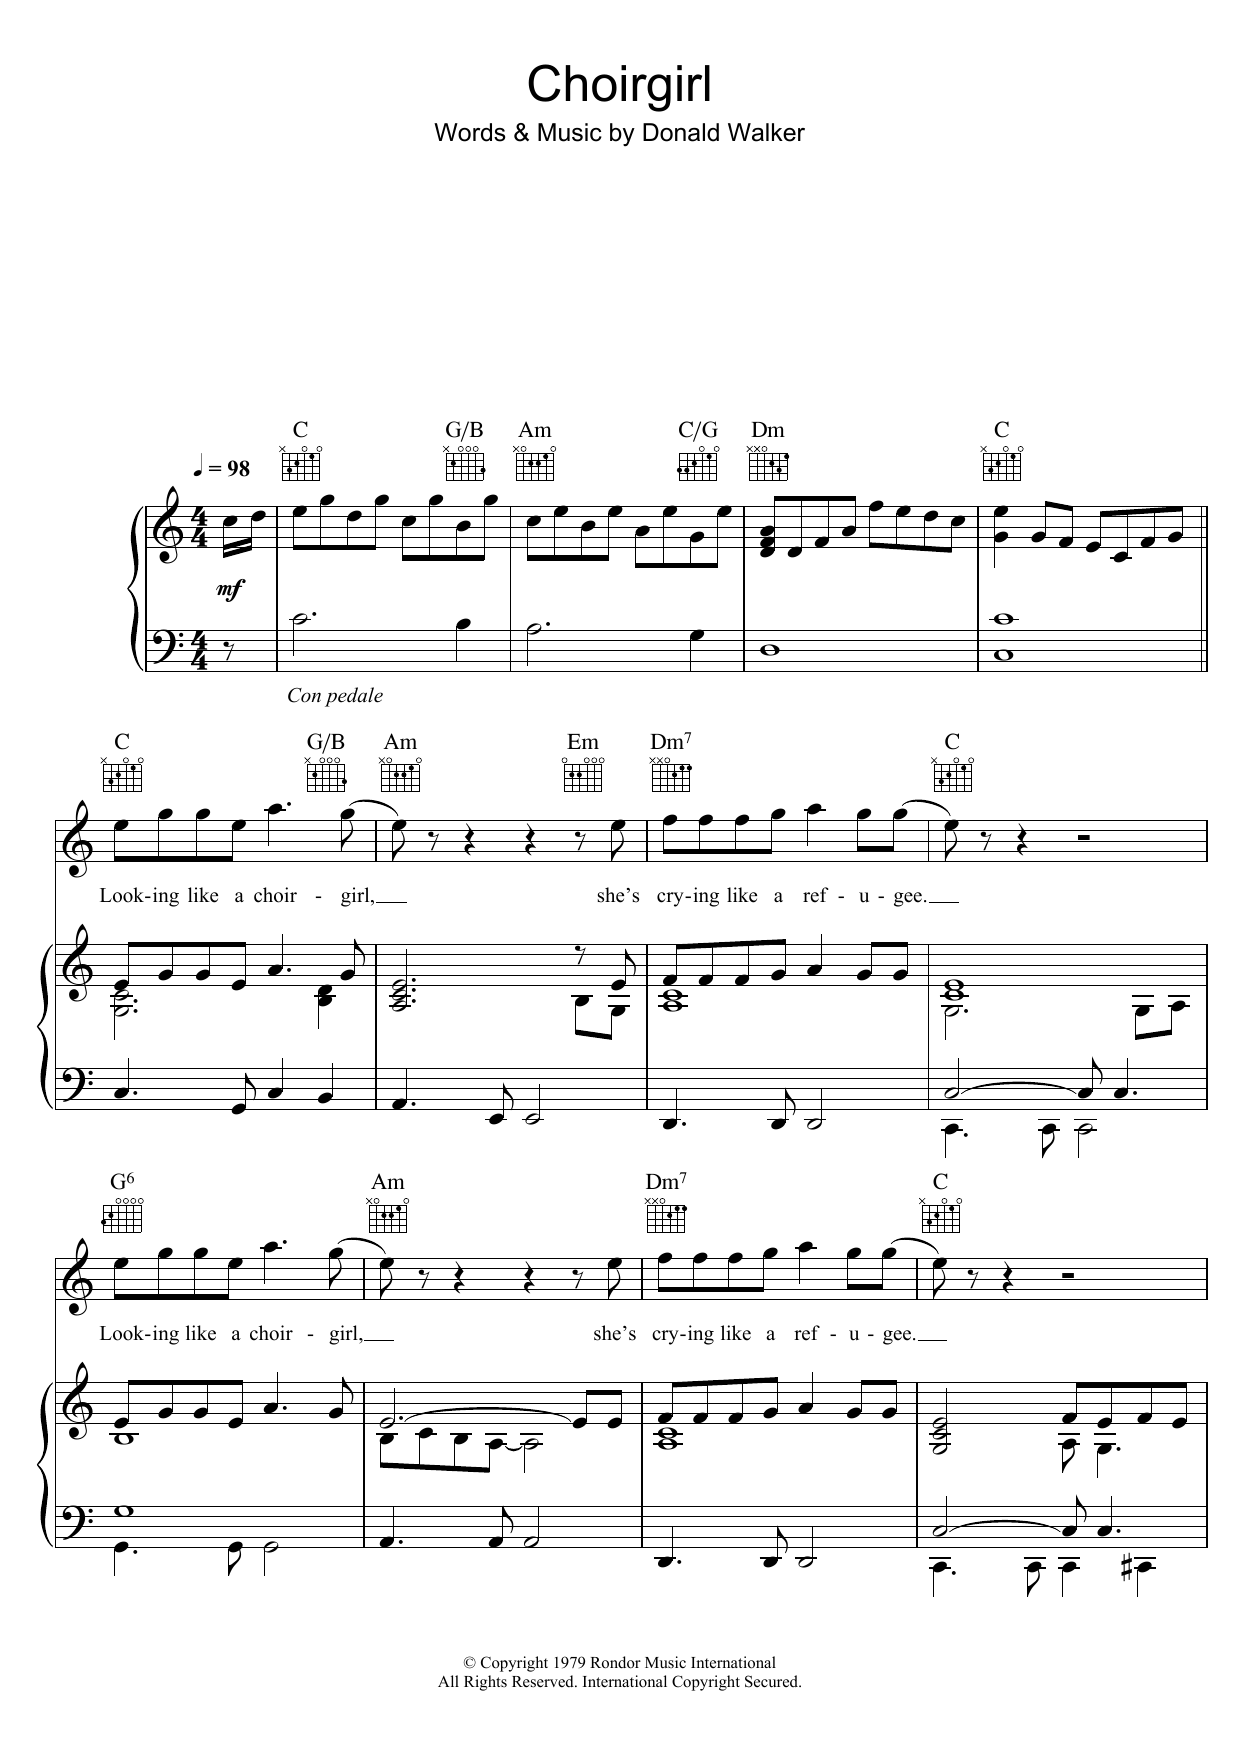 Cold Chisel Choirgirl Sheet Music Notes & Chords for Ukulele - Download or Print PDF